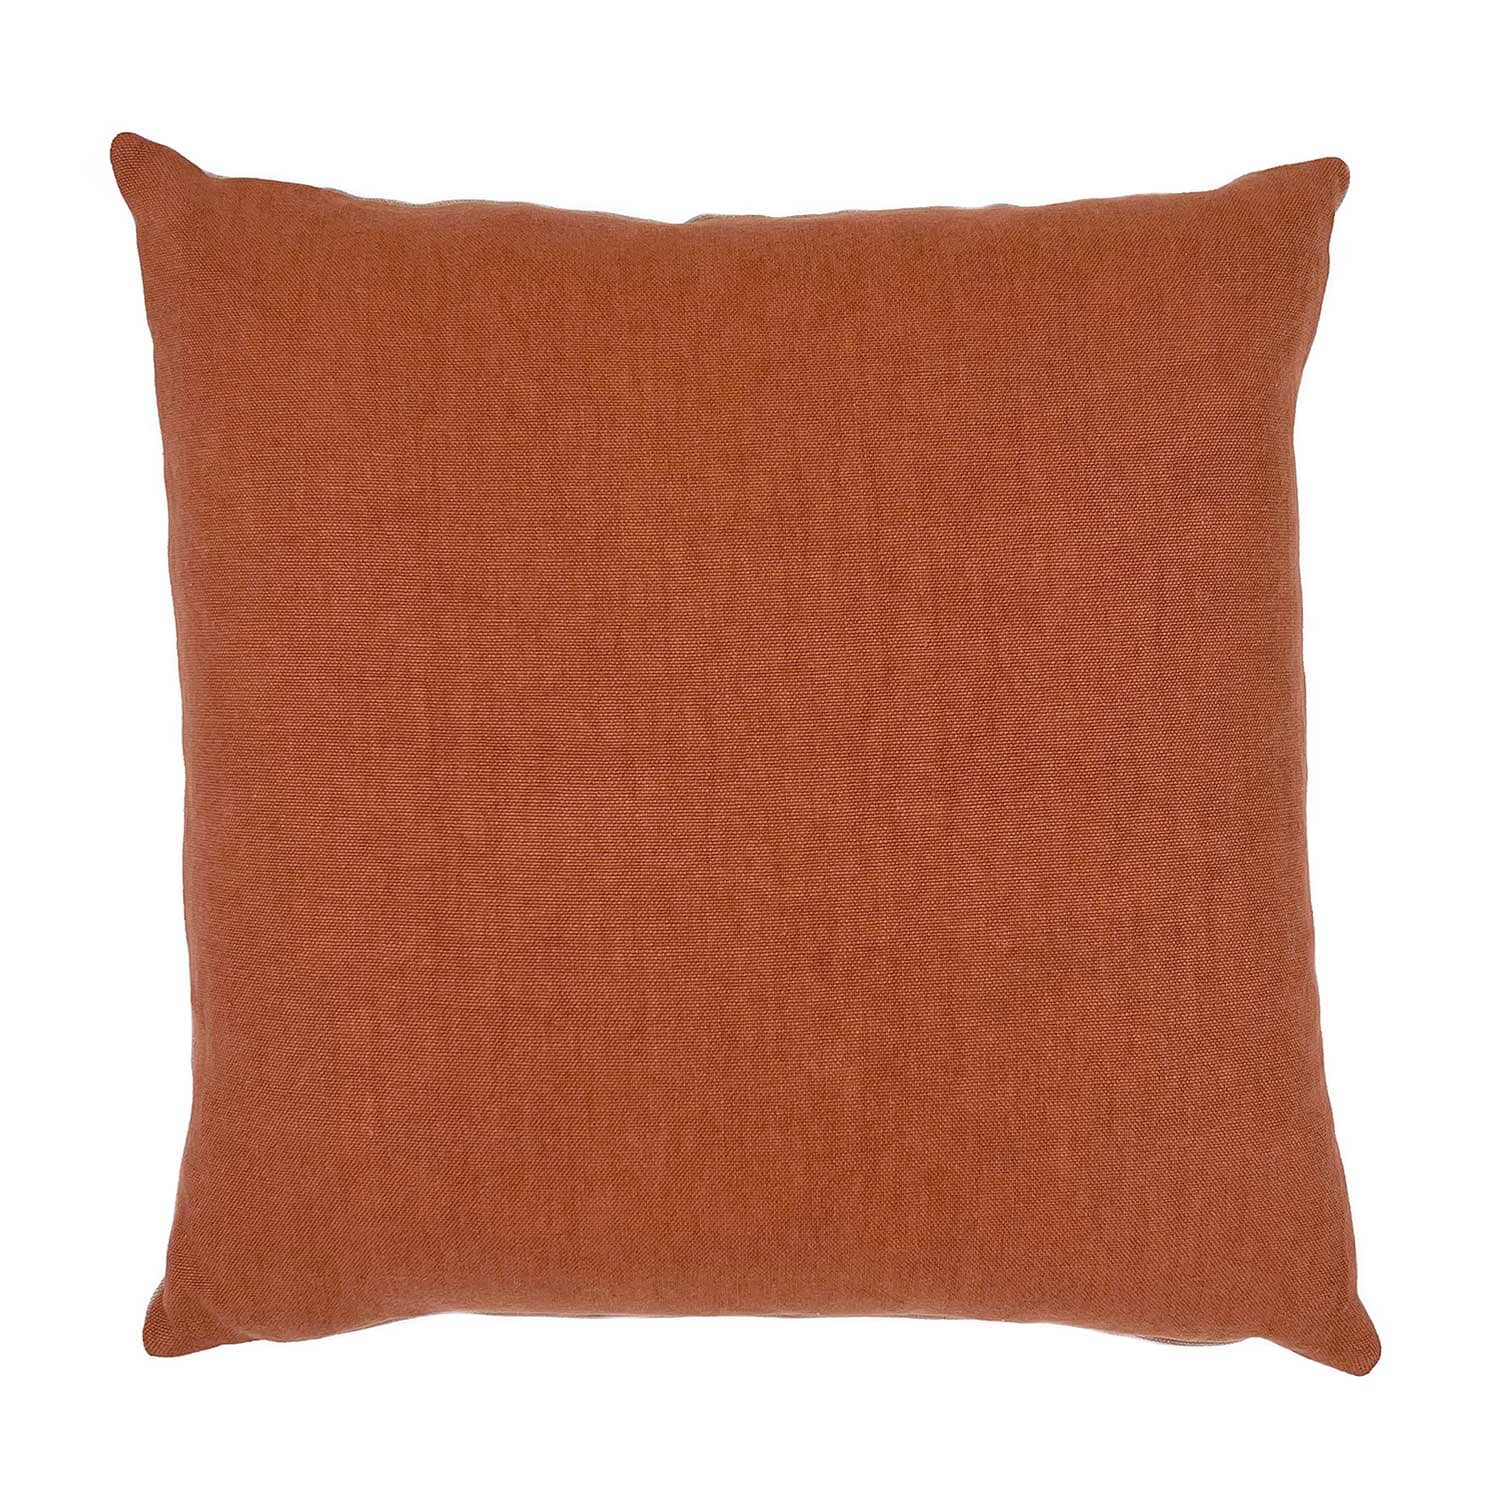 Paprika/Blush linen cushion - Barnbury